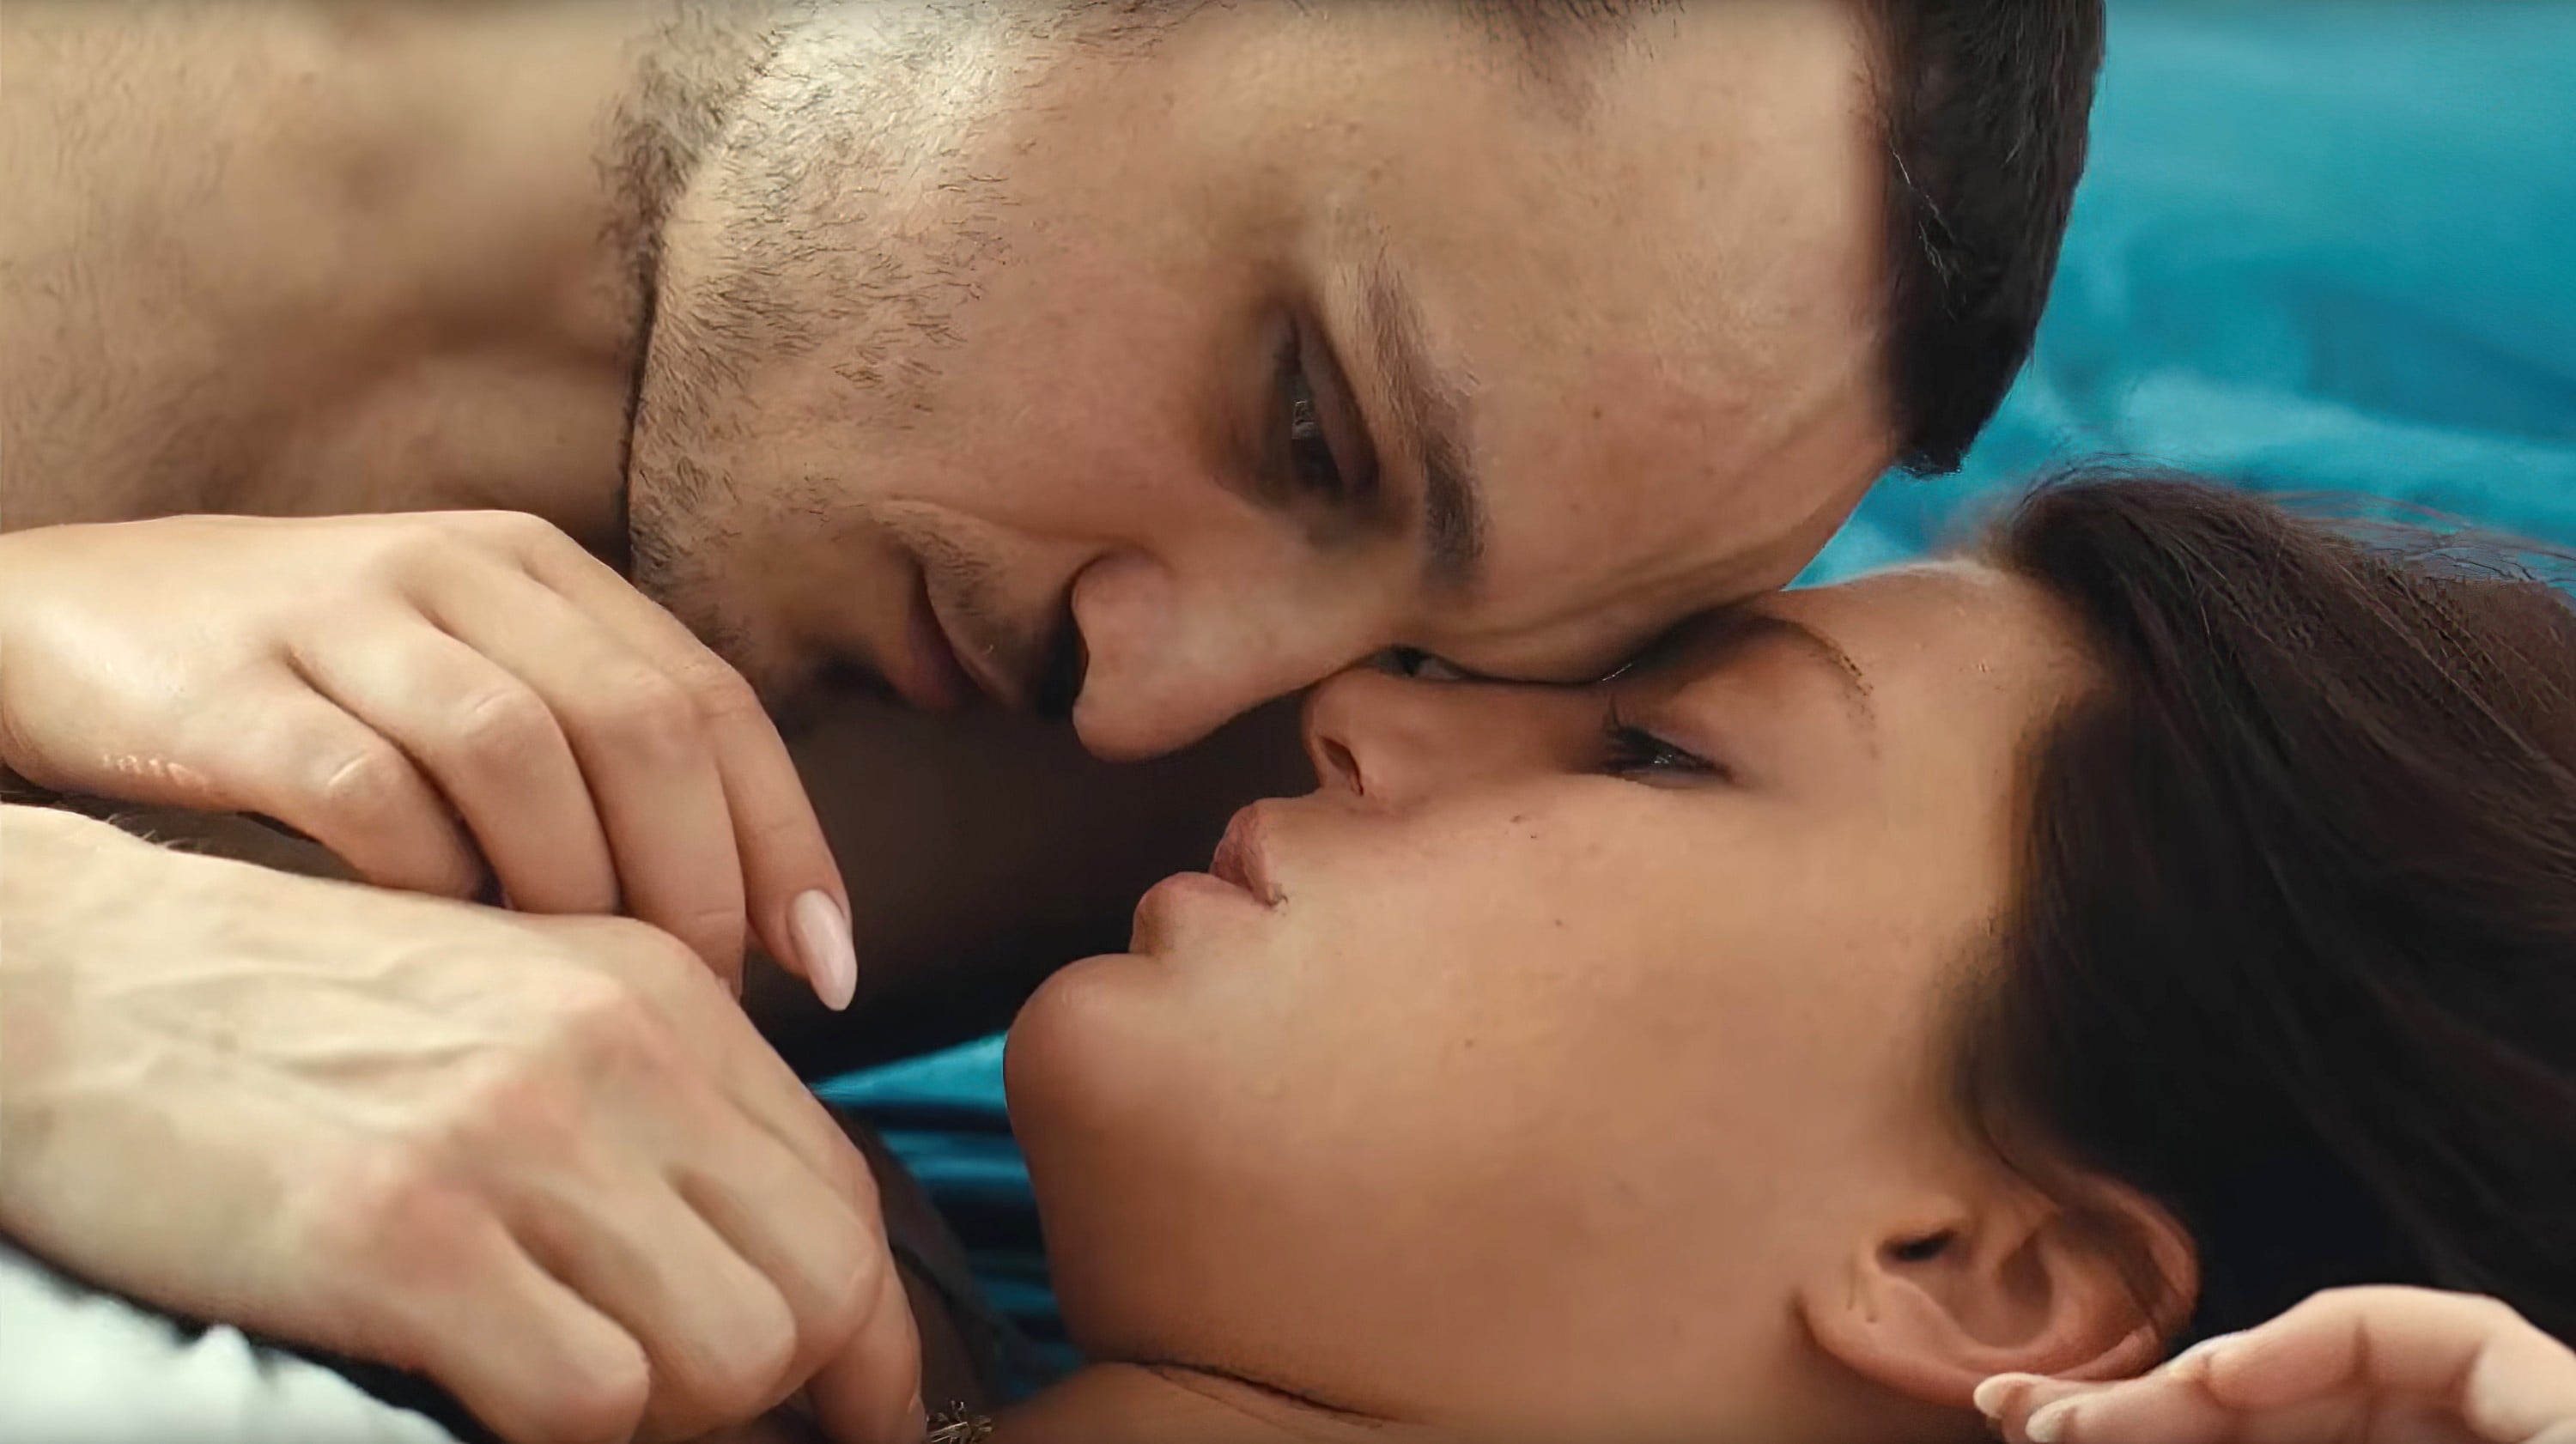 Xxx Blue Film Hottest New Hd Super Latest - Best NC-17 Movies to Watch | POPSUGAR Love & Sex